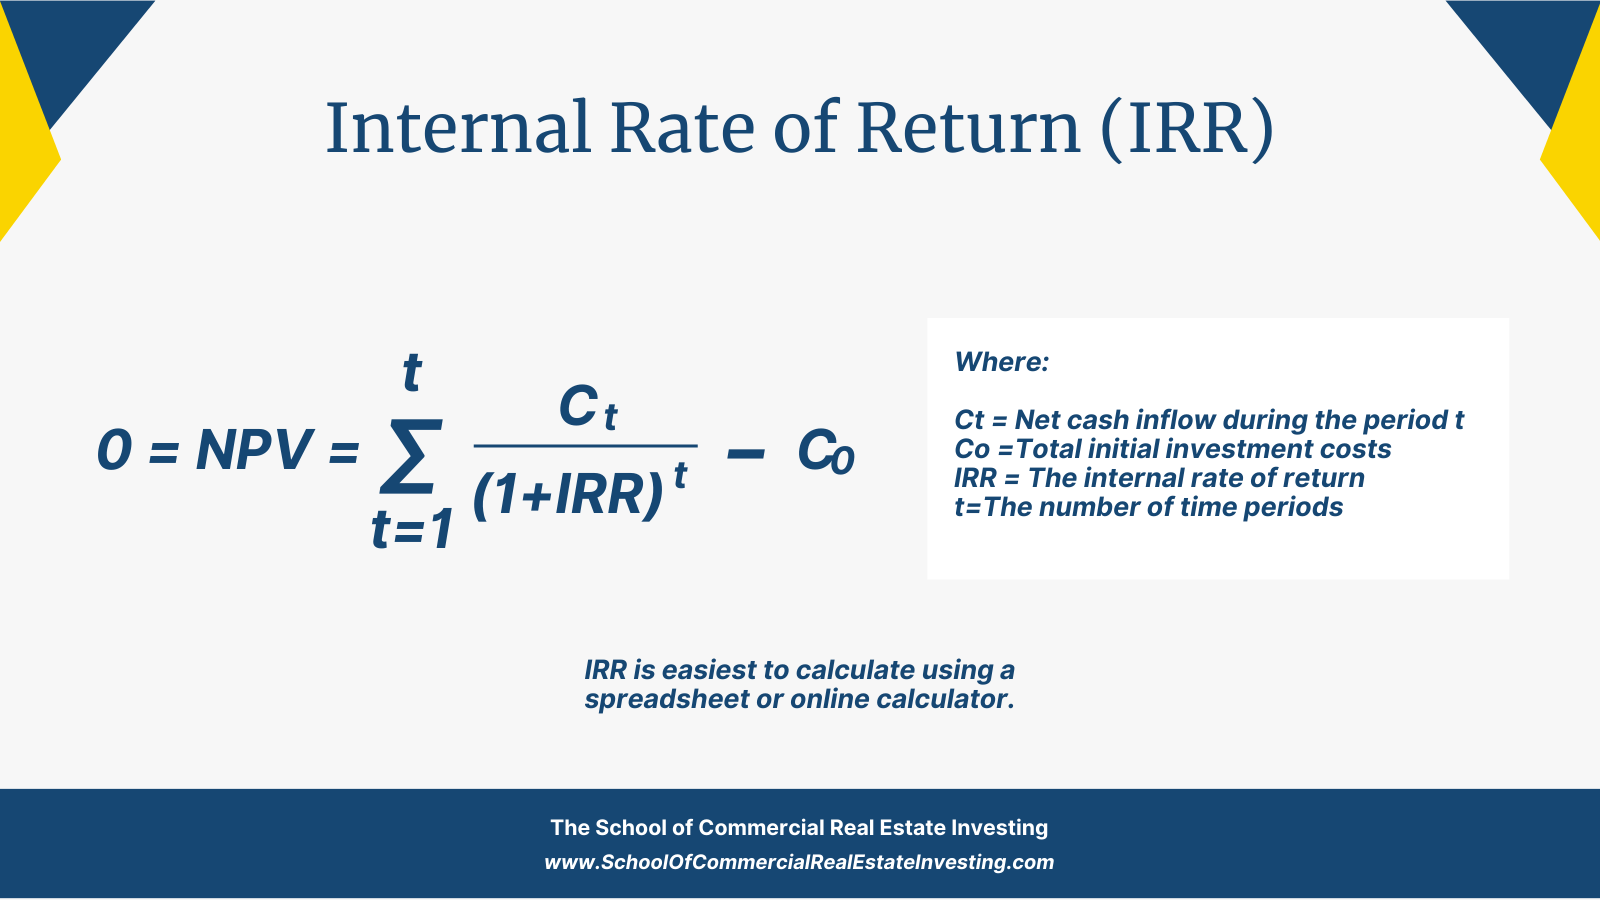 Calculate the Internal Rate of Return (IRR) formula.